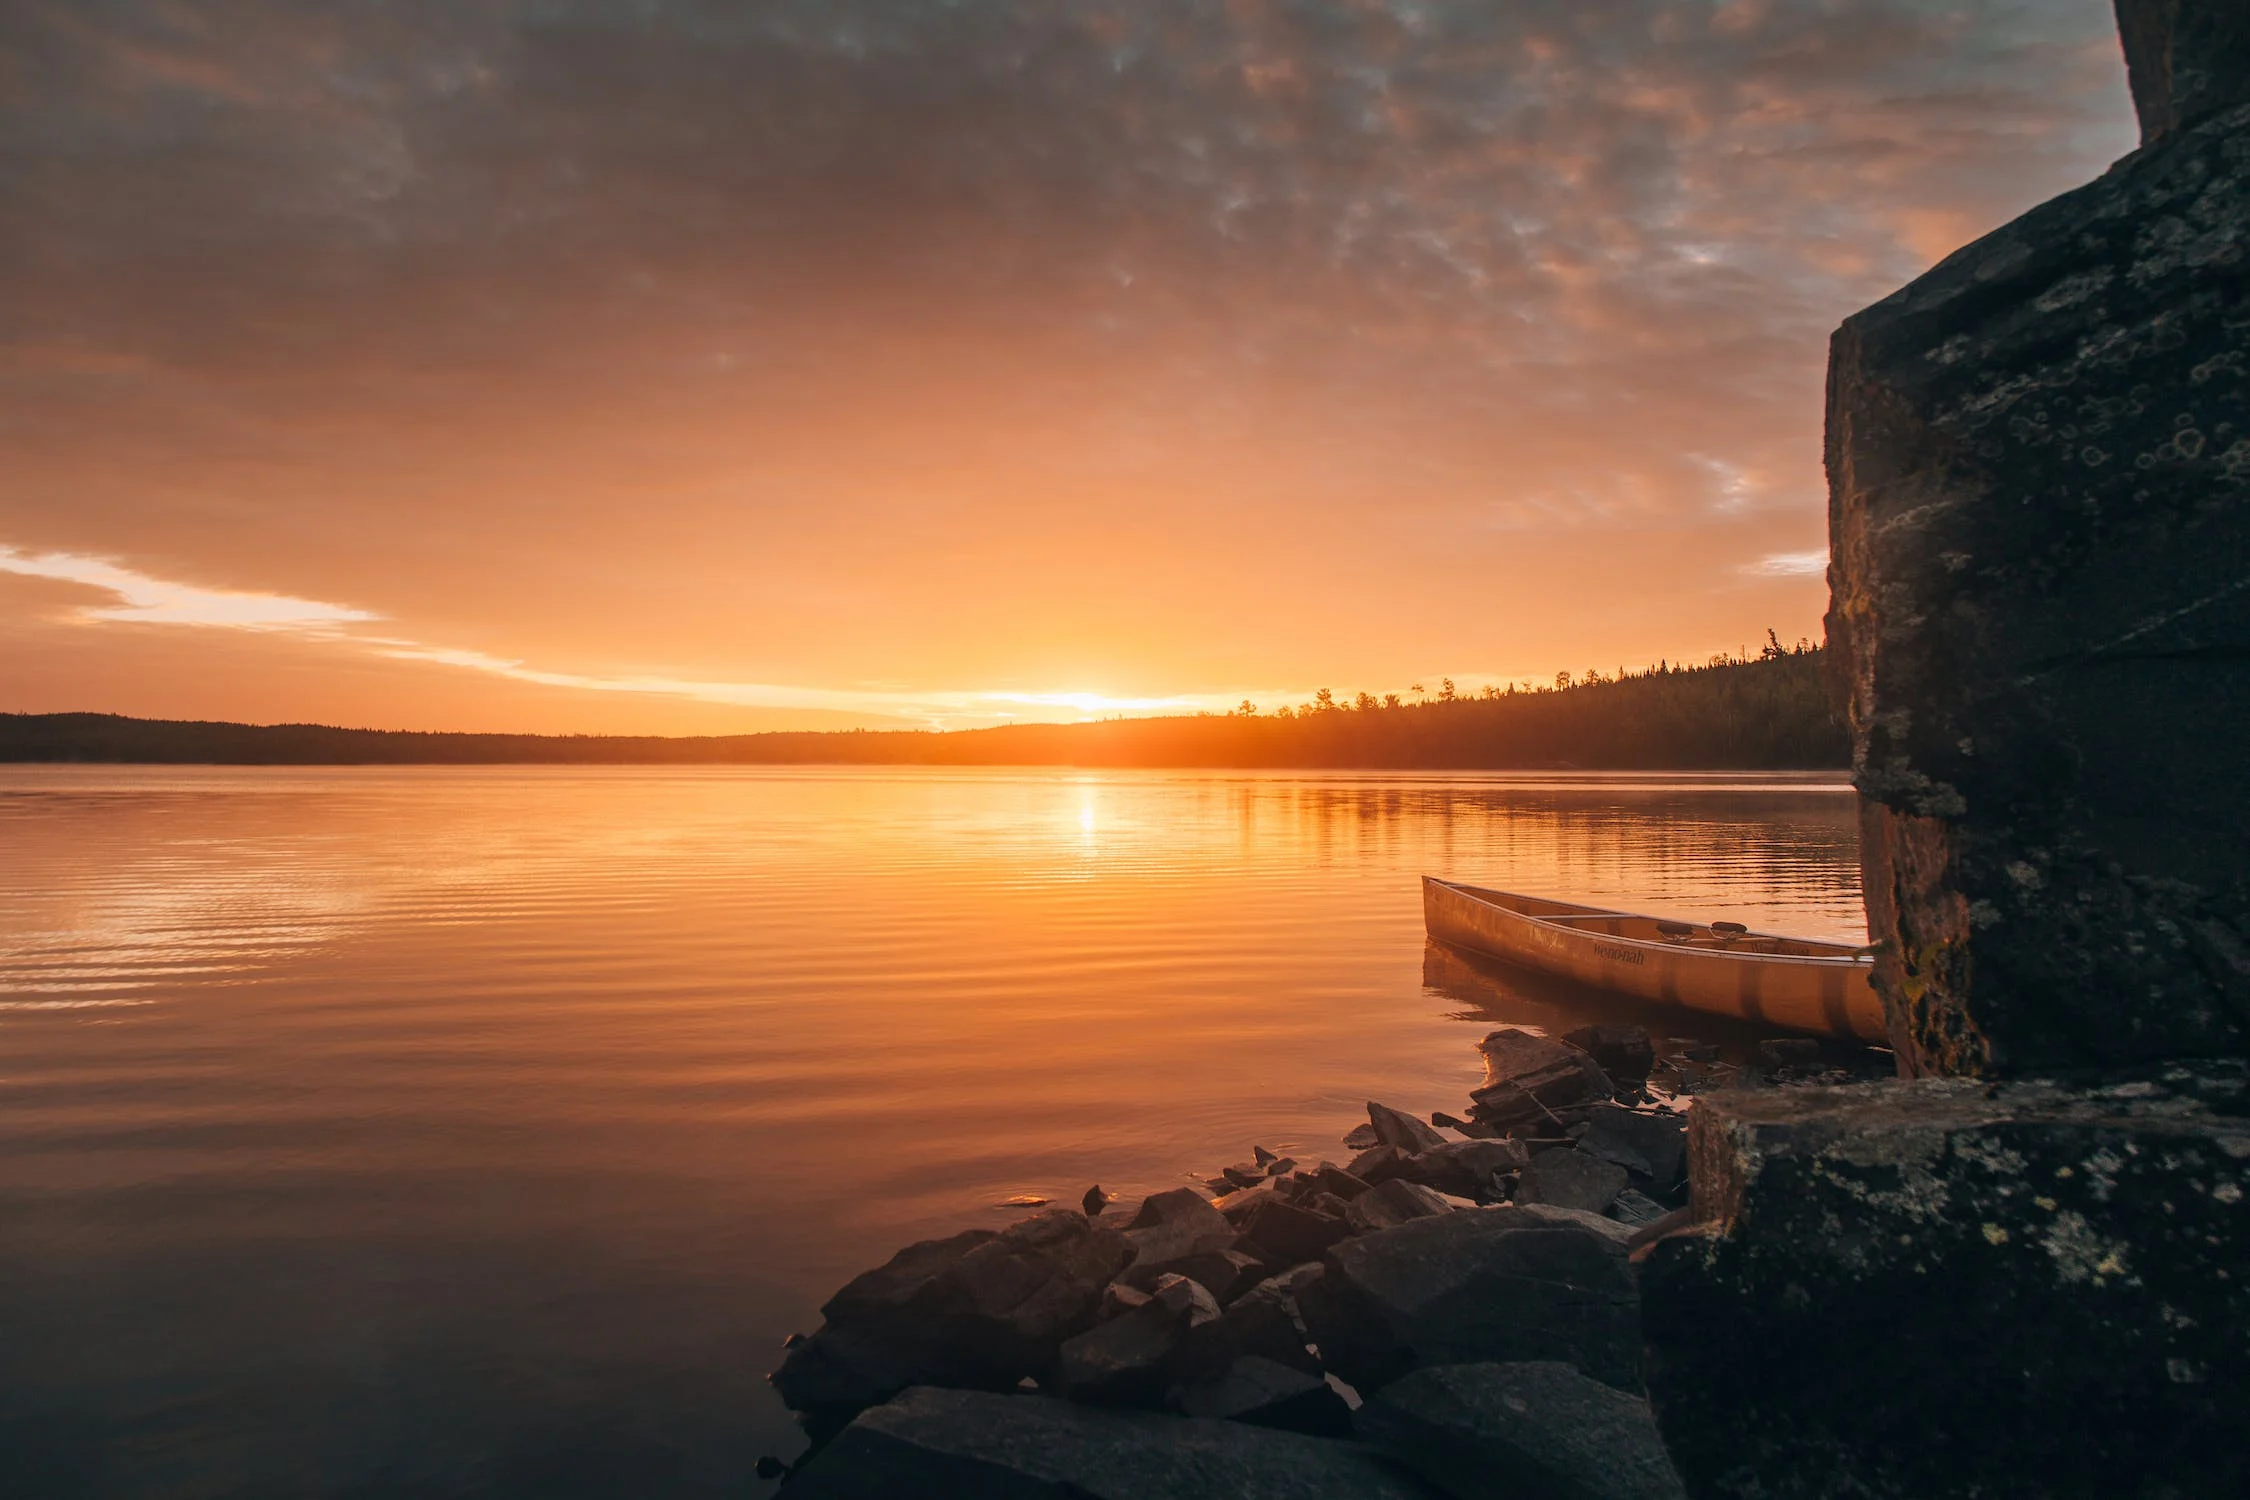 A beautiful landscape of a sunrise over a lake with a canoe.